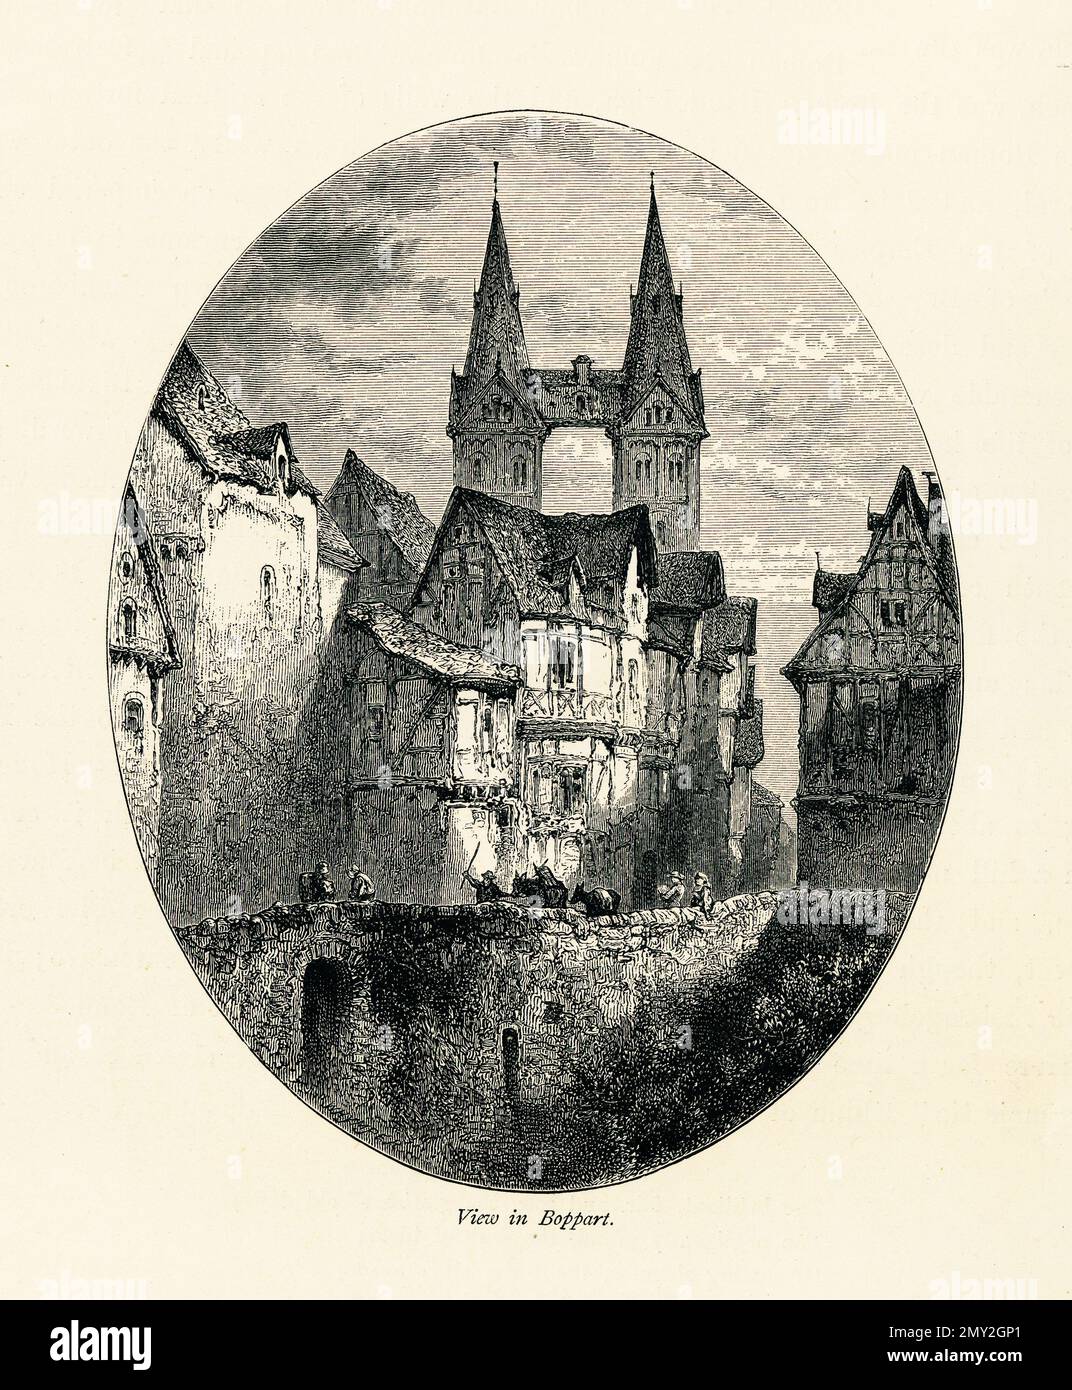 Antica illustrazione di Boppard, una città in Germania. Incisione pubblicata in picturesque Europe, Vol. III (Cassell & Company, Limited: London, Paris & N Foto Stock